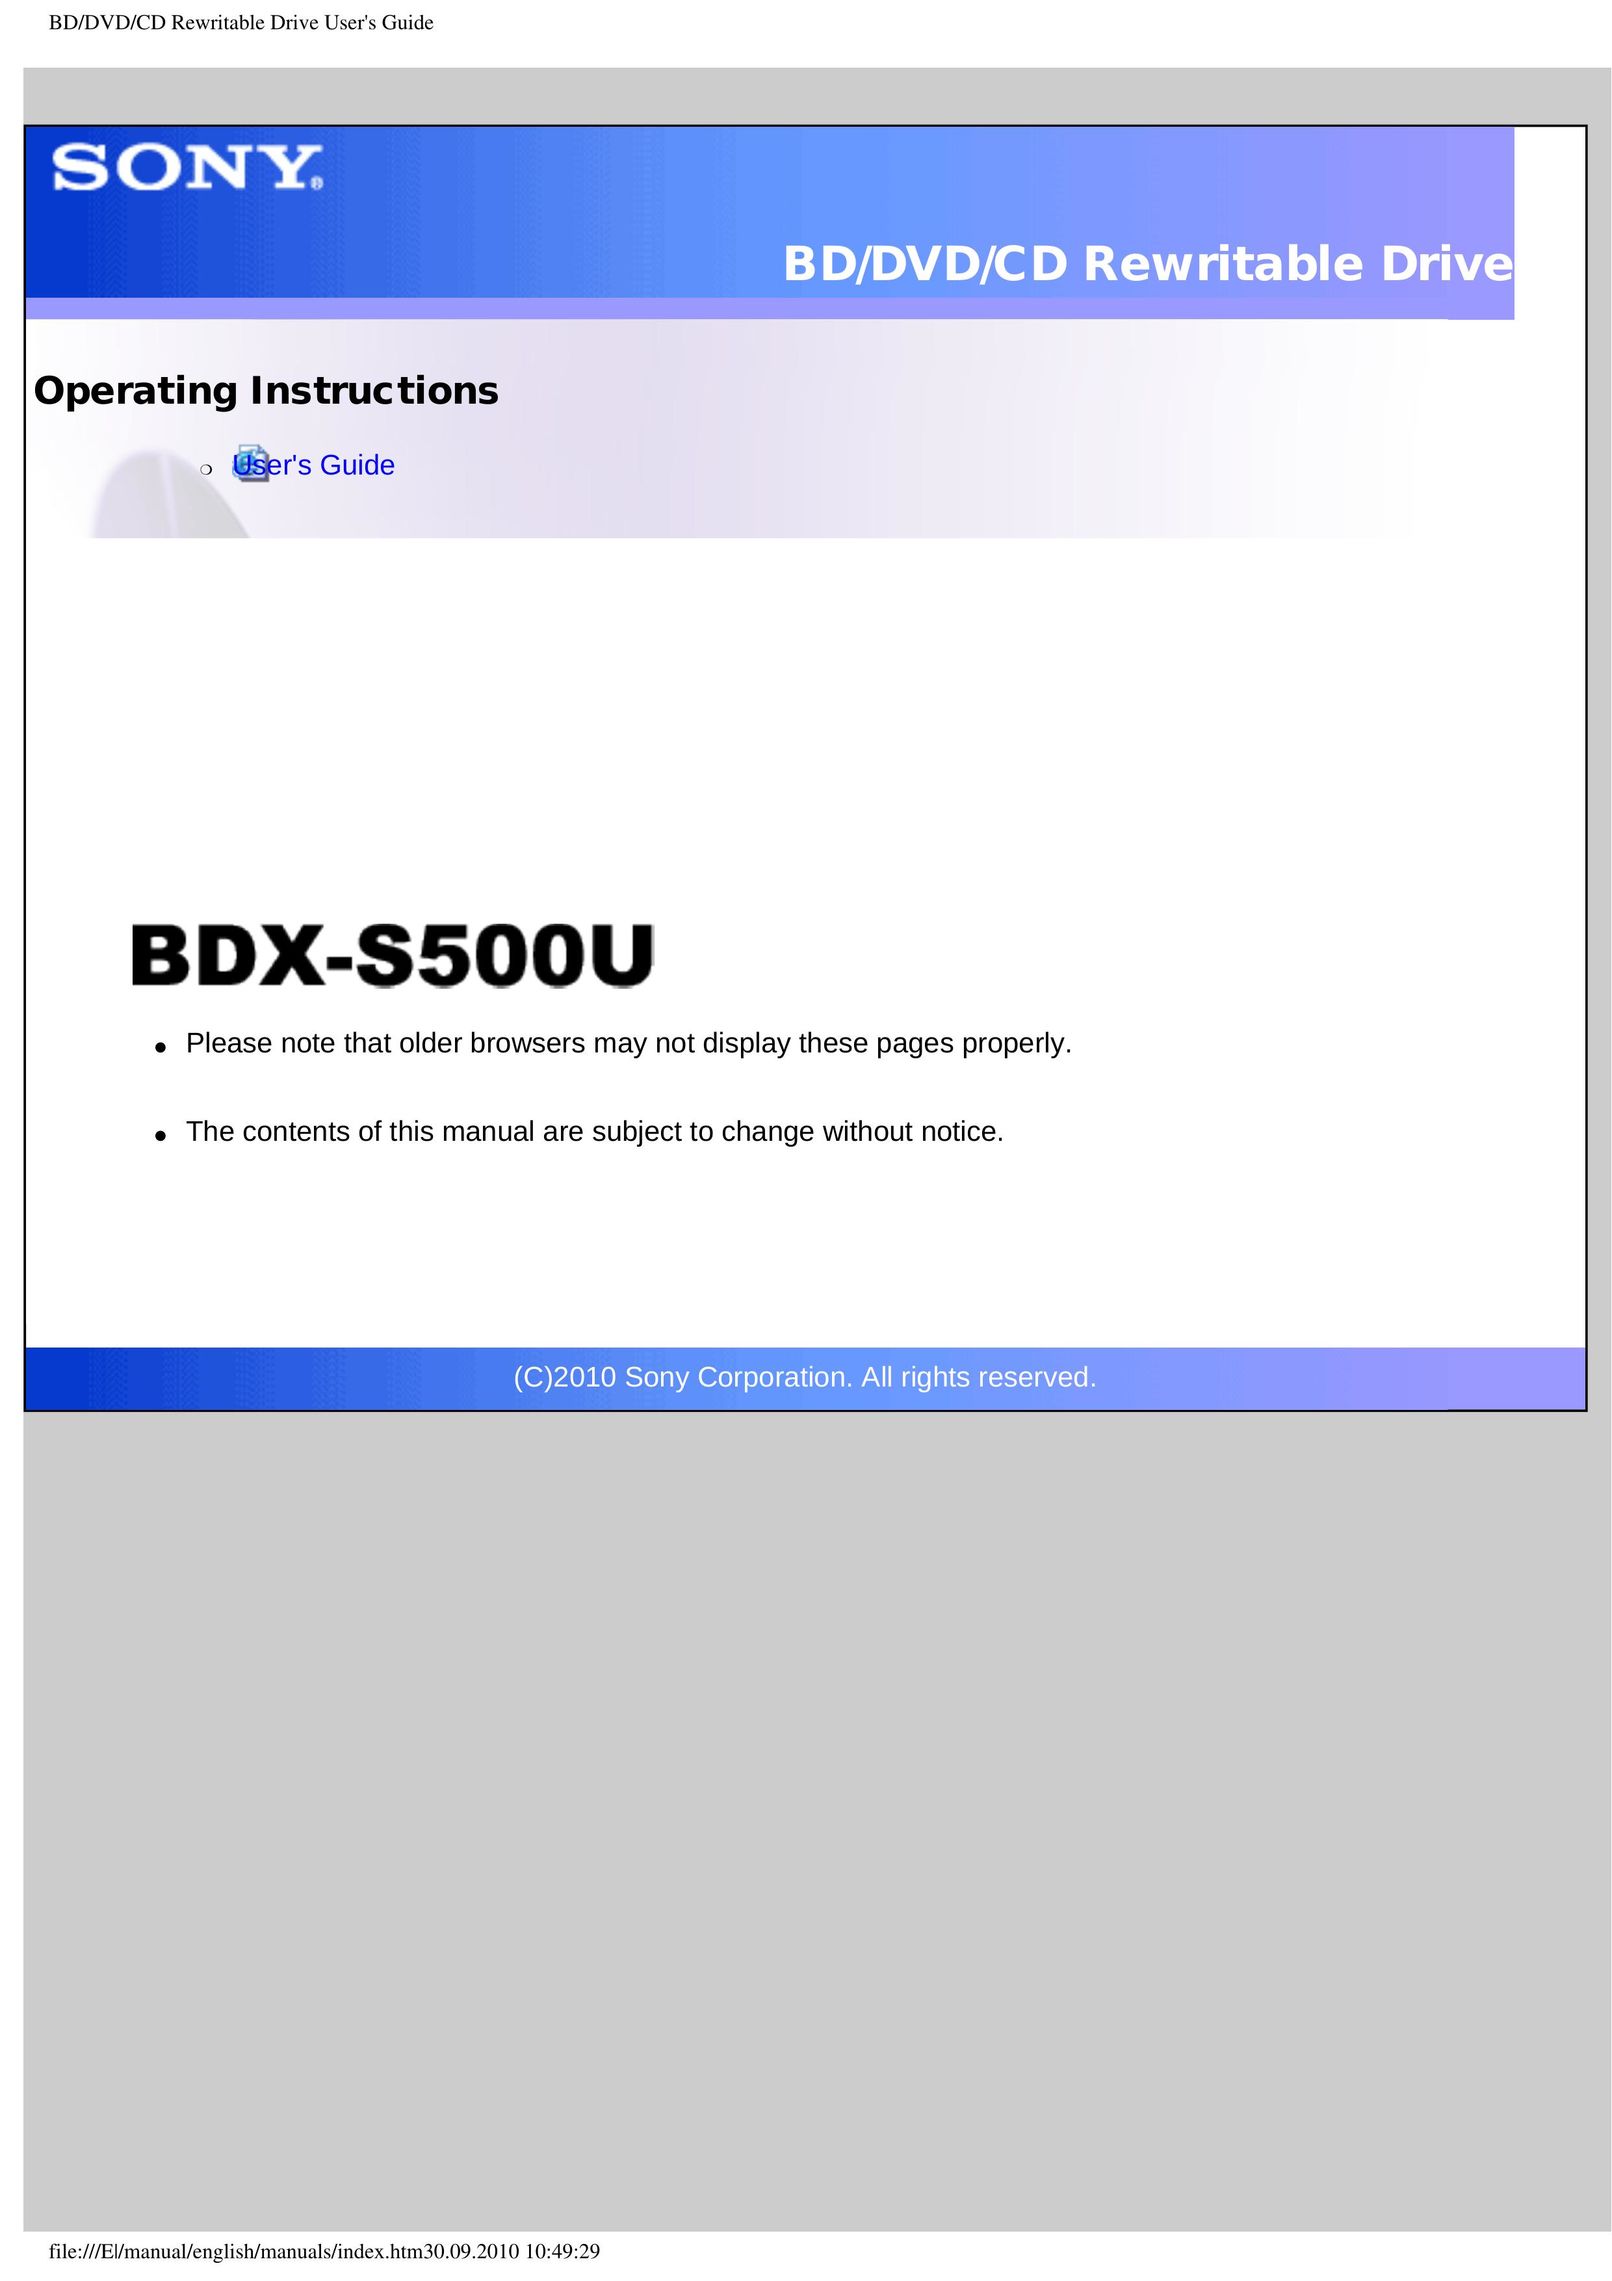 Sony BDX-S500U Computer Drive User Manual